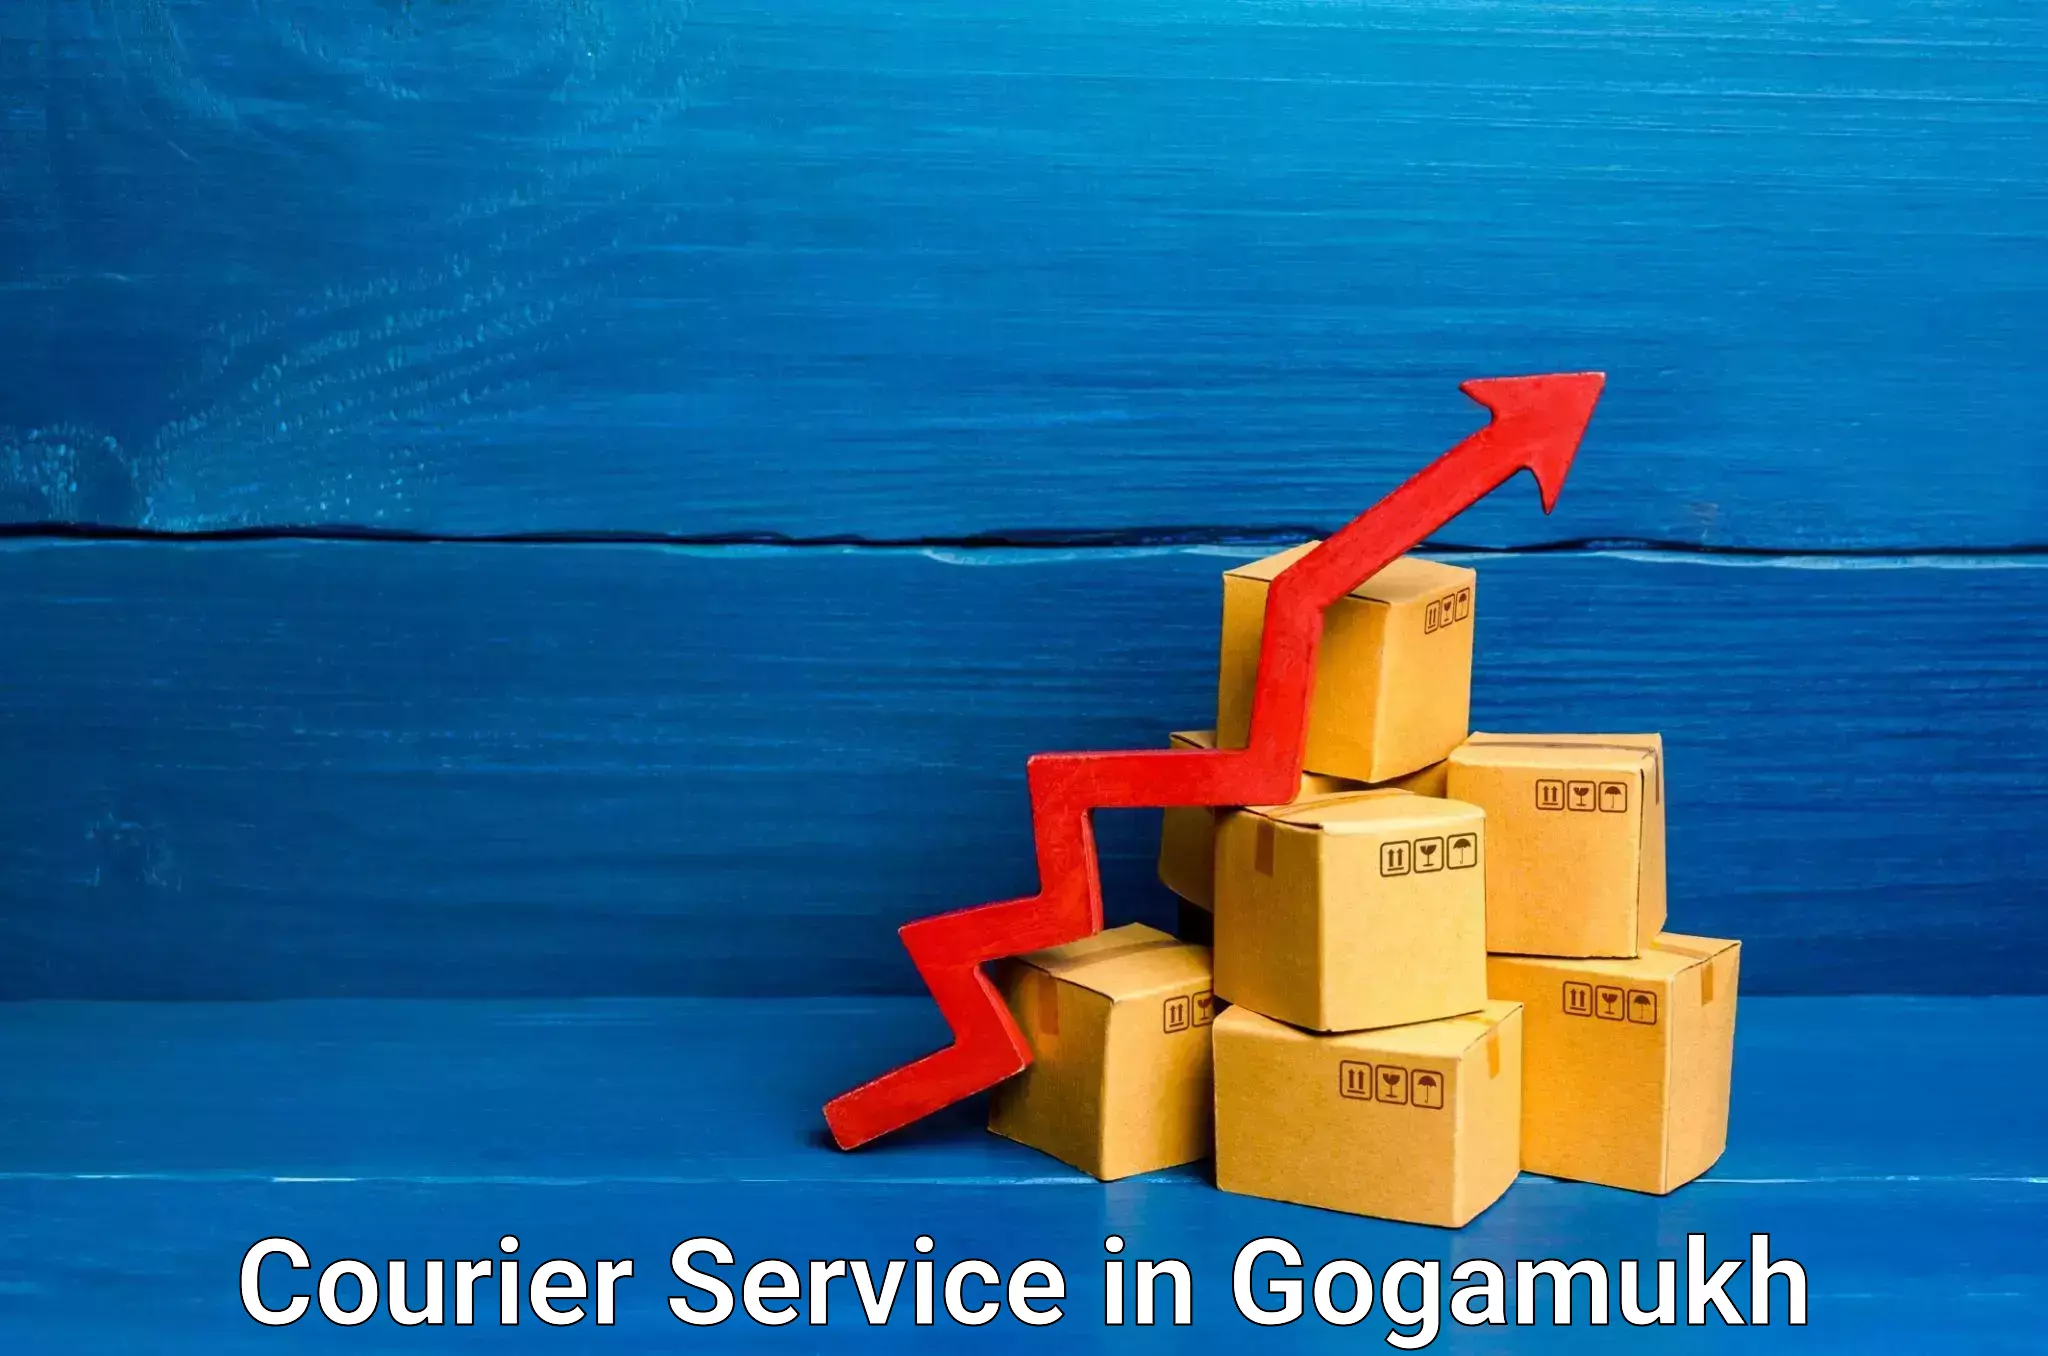 Comprehensive parcel tracking in Gogamukh